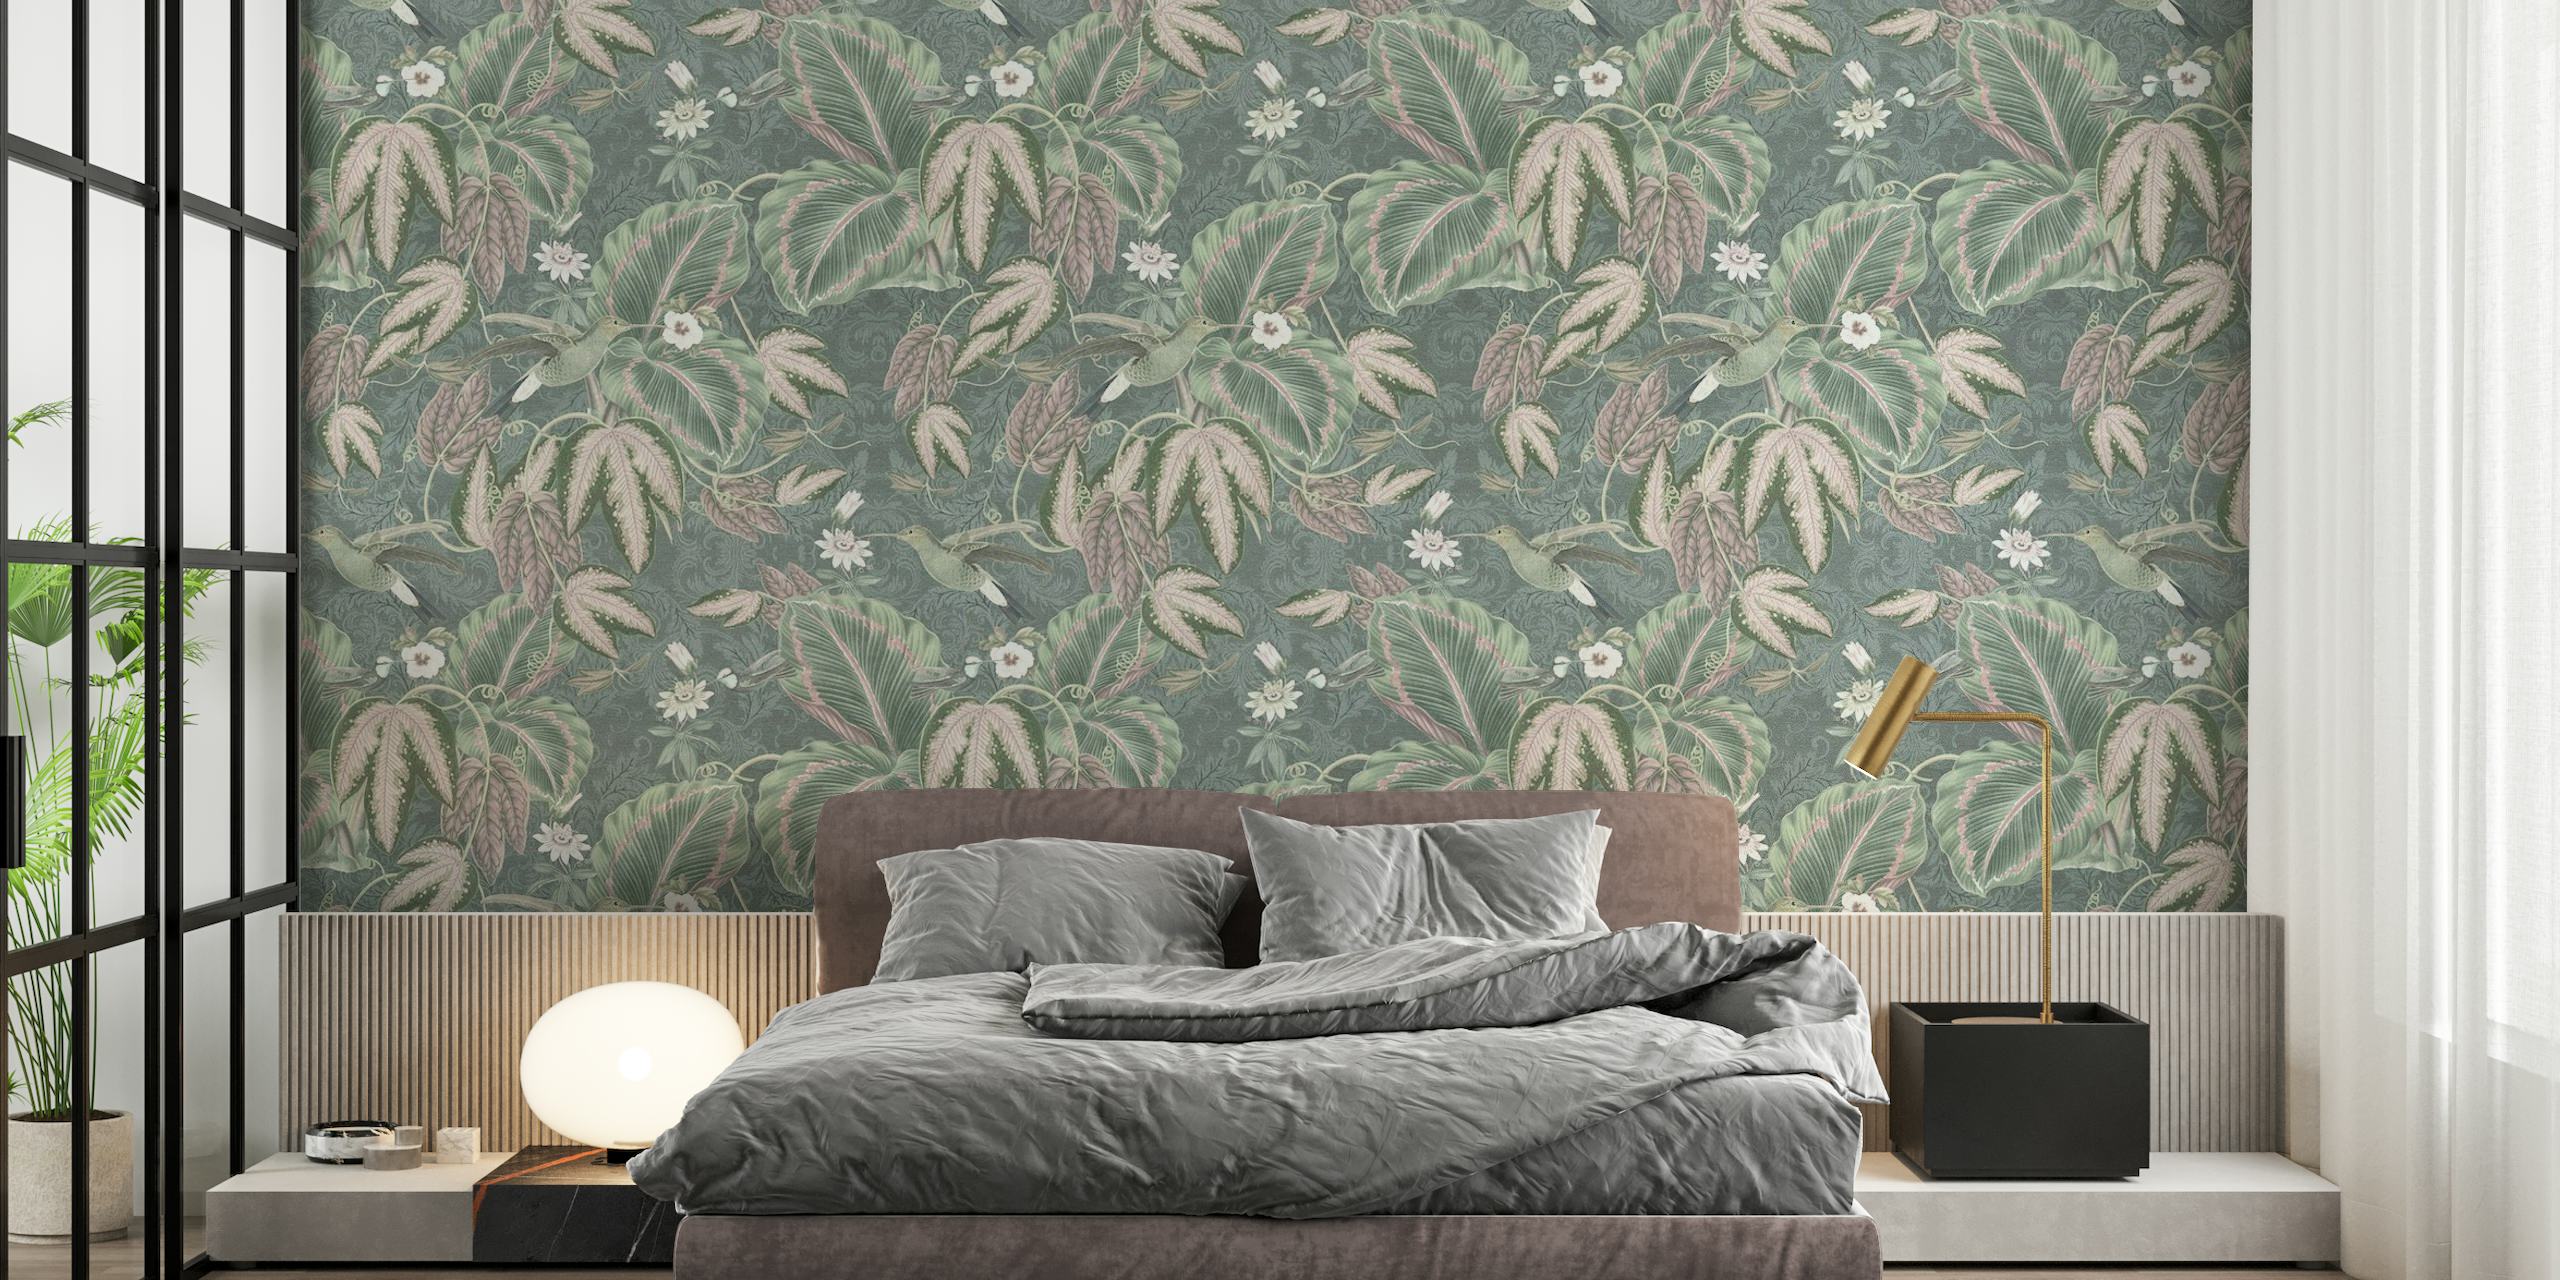 Vintage birds of paradise foliage wallpaper